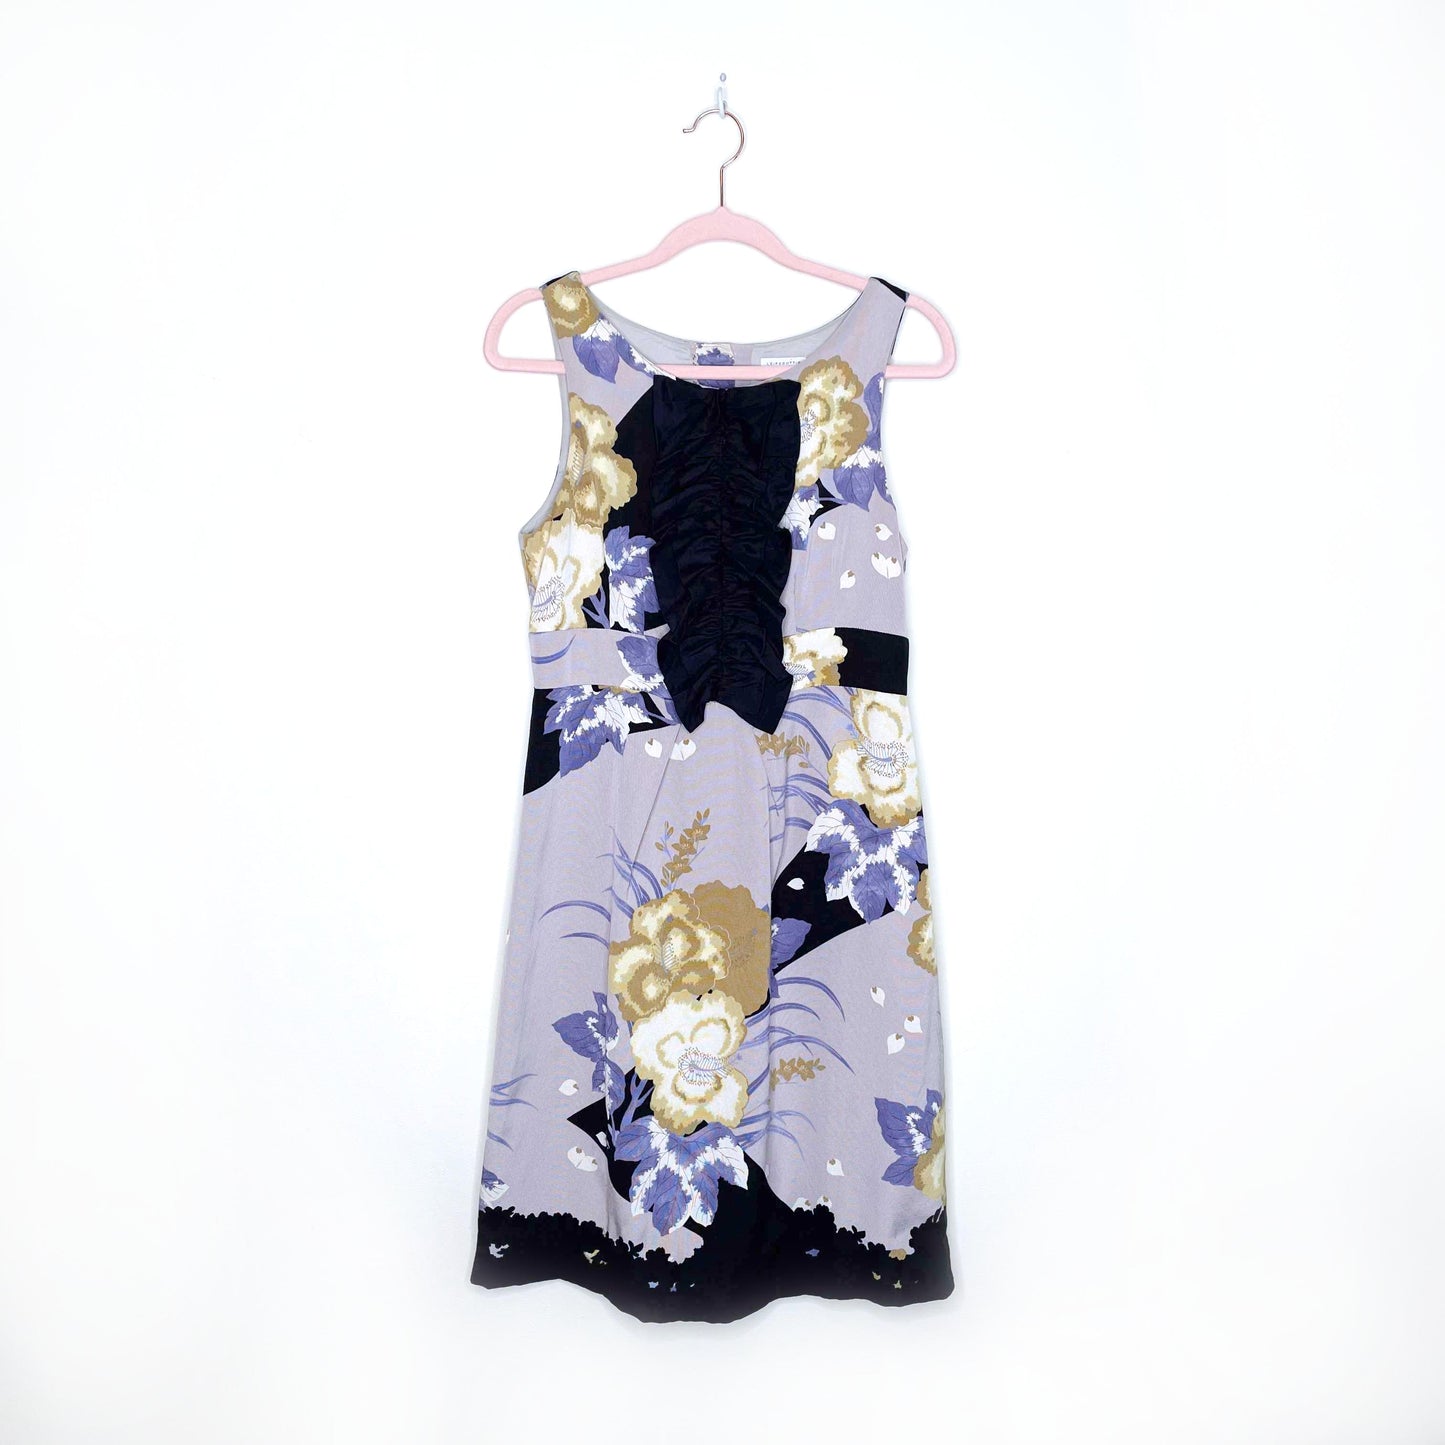 leifsdottir quarry lake silk floral ruffled dress with cutout back - size 4